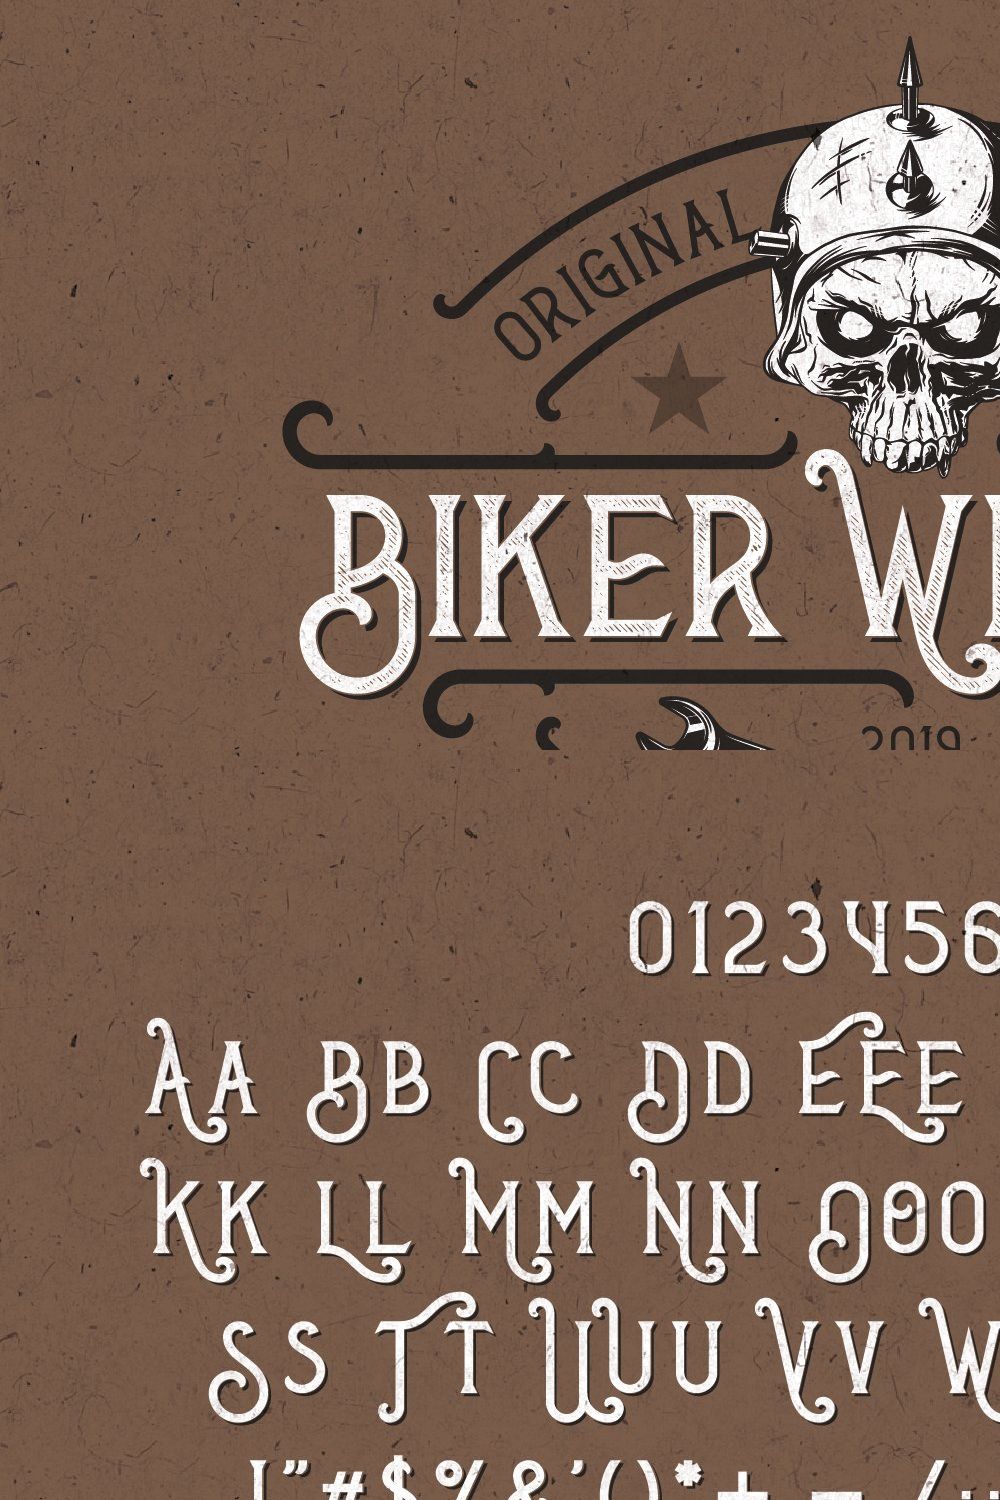 Biker Whiskey pinterest preview image.